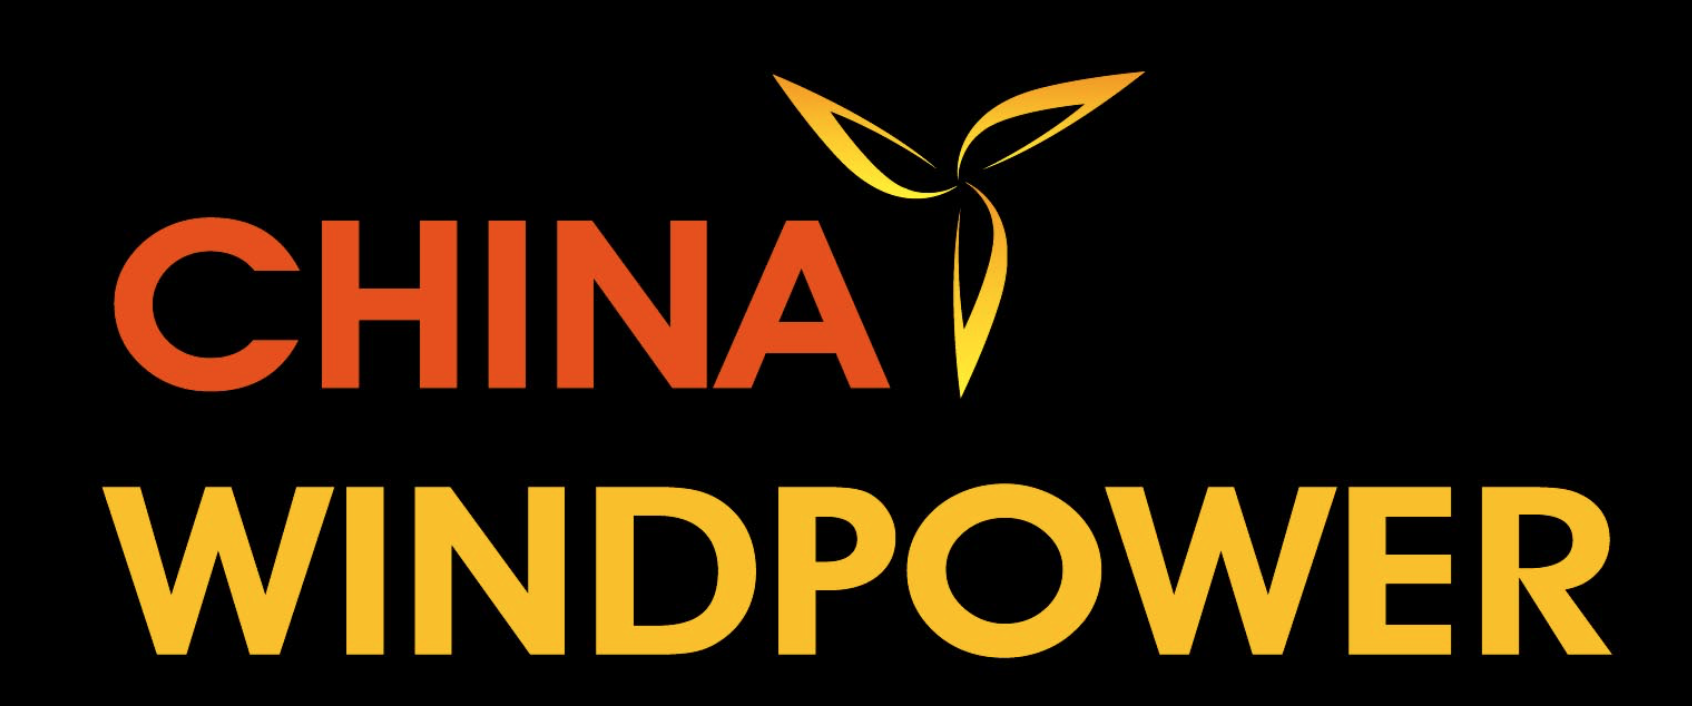 China WindPower